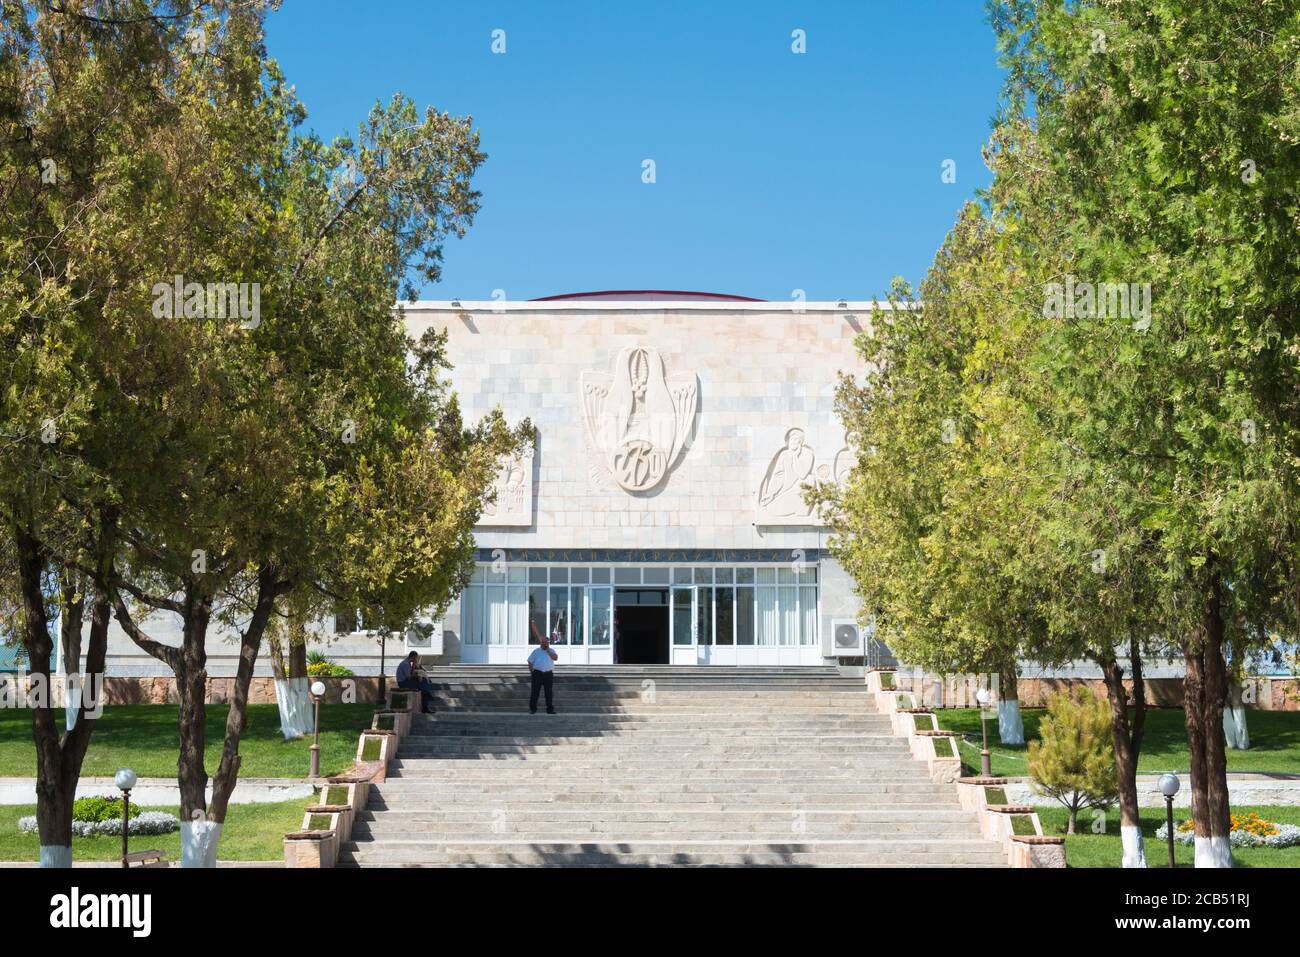 Samarkand, Uzbekistan - Afrasiab Museum. a famous historic site in Samarkand, Uzbekistan. Stock Photo